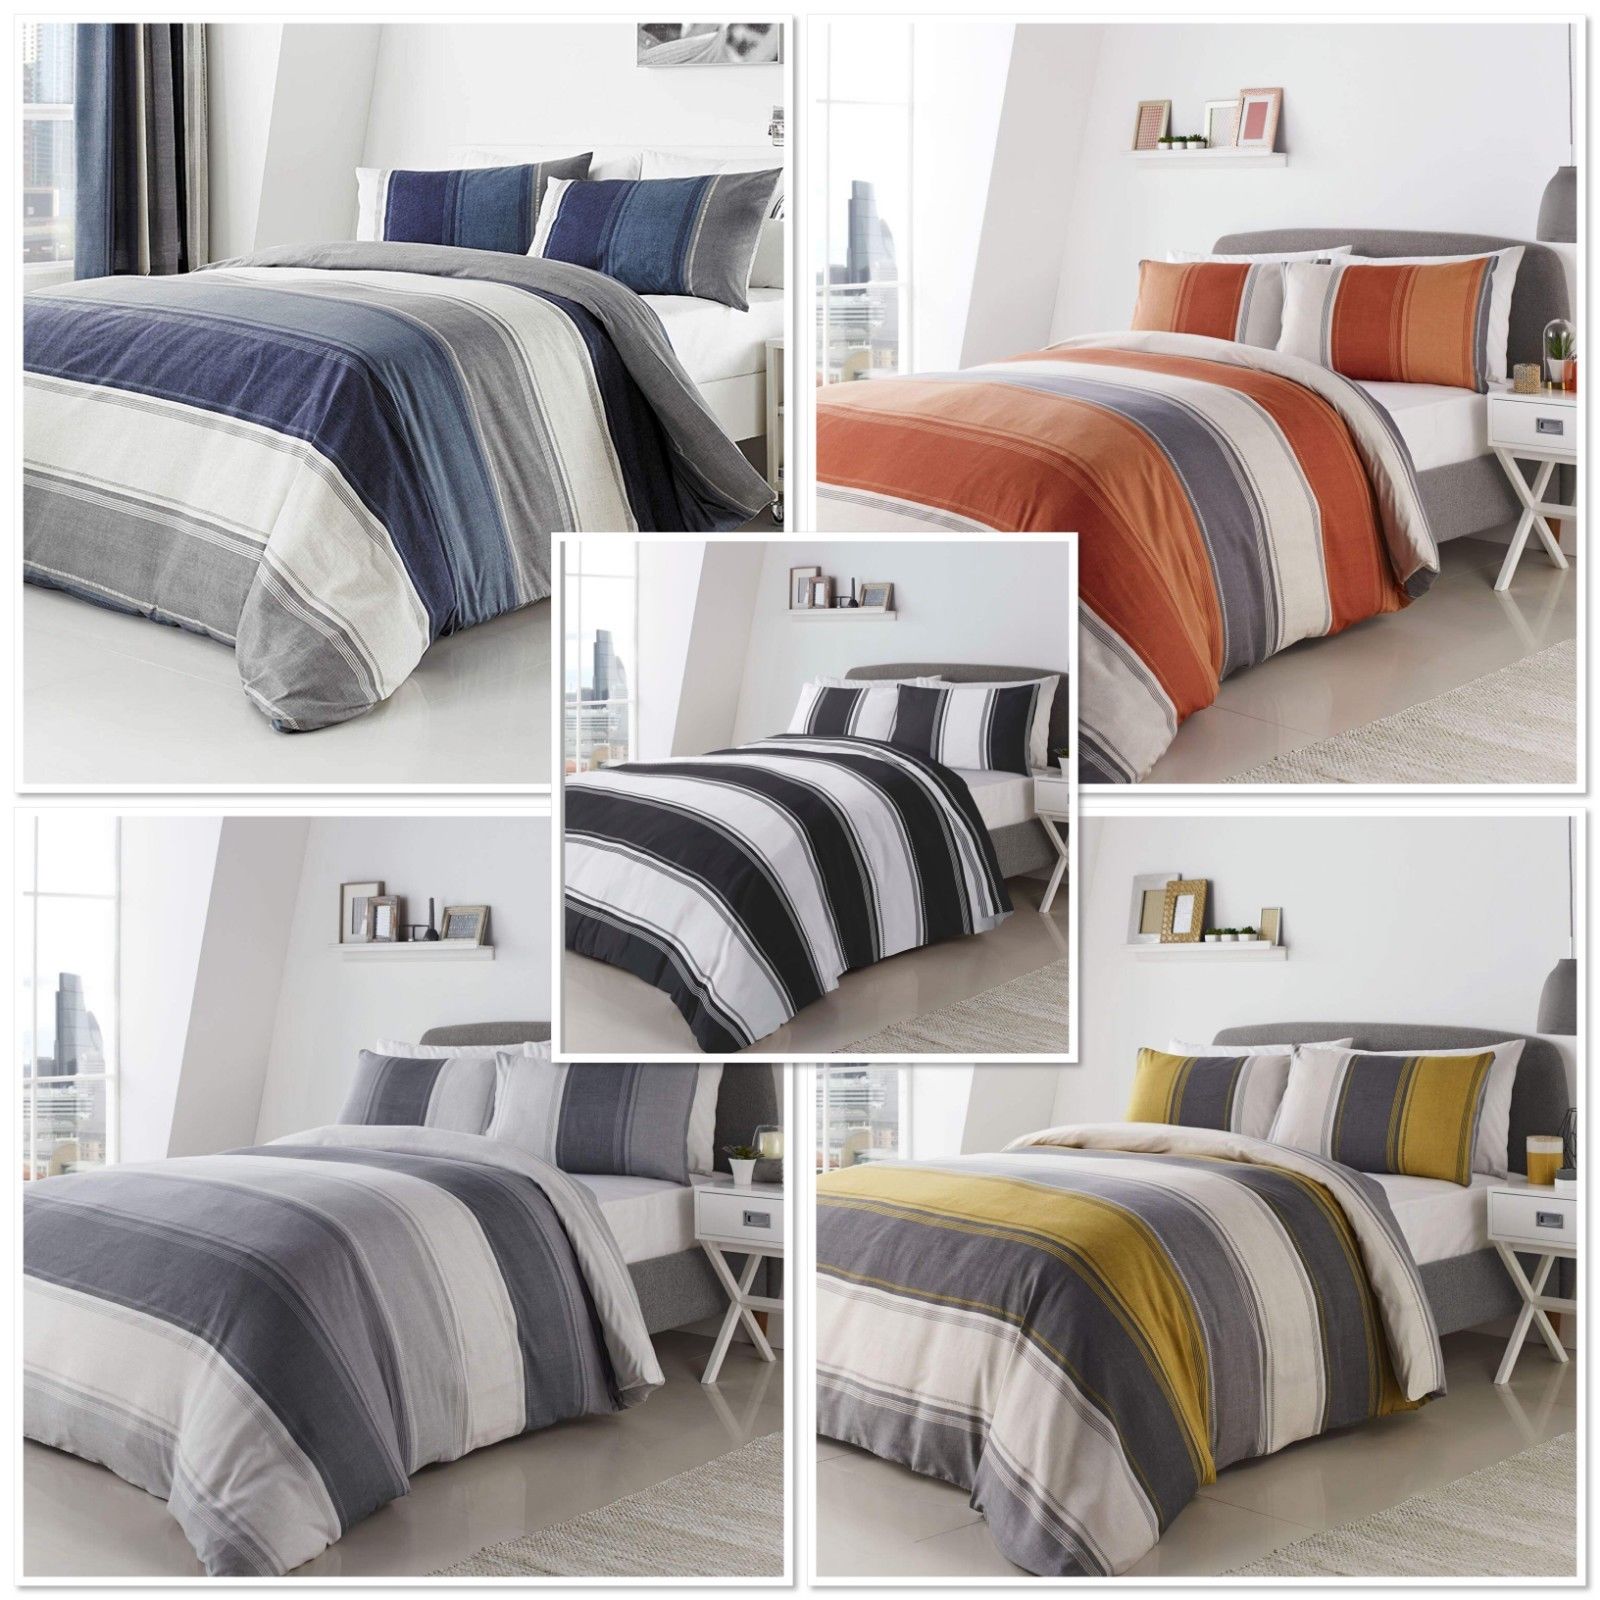 Betley Wide Stripe Duvet Cover Bed Sets Blue Spice Grey Ochre